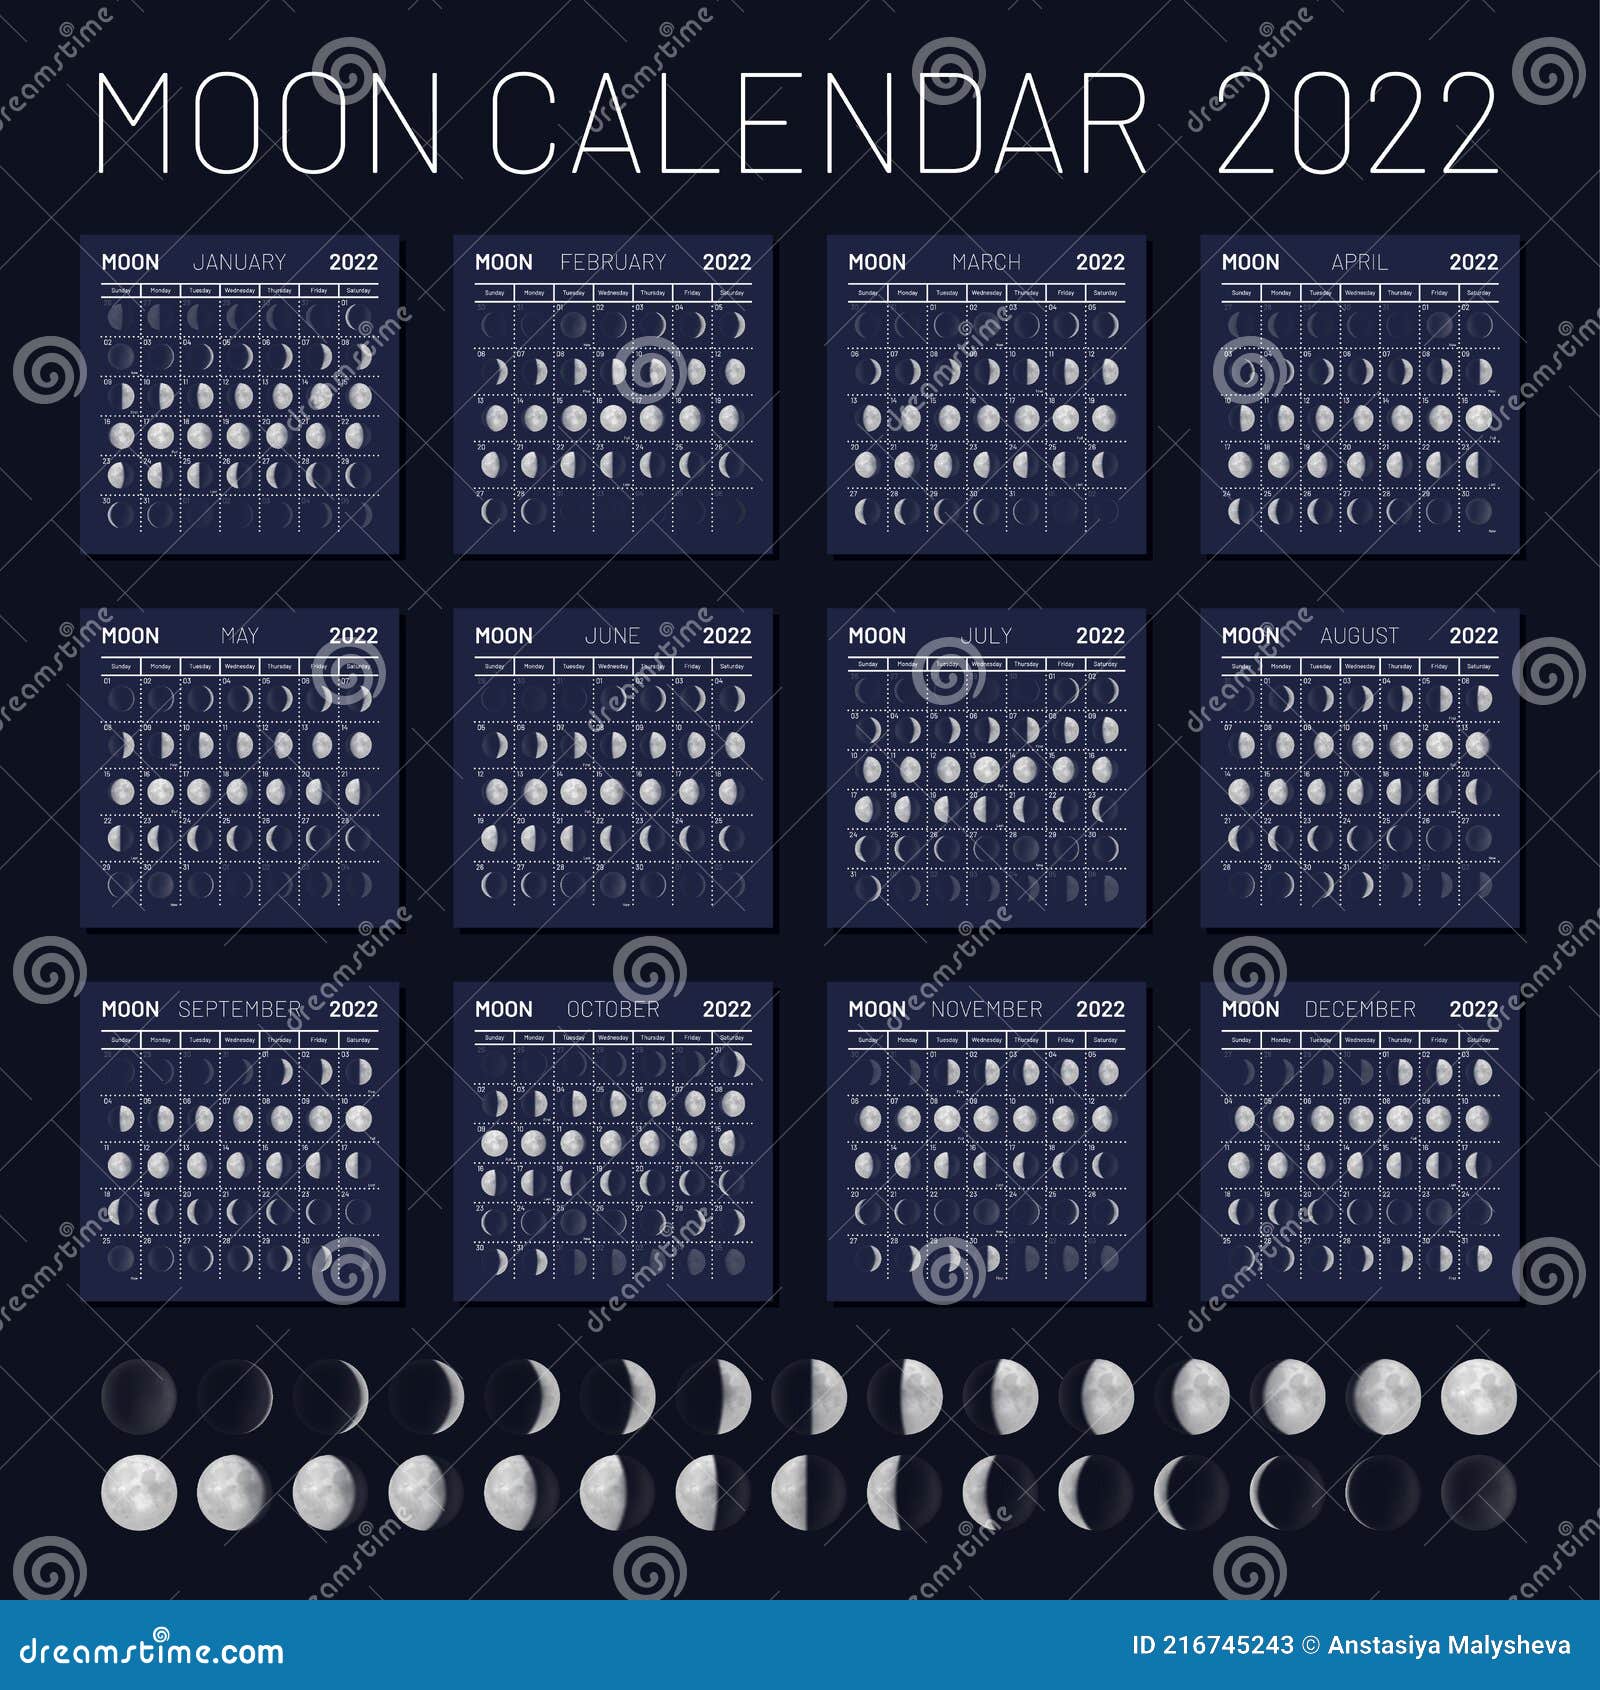 Celestial Calendar 2022 Moon Calendar 2022 Year On Night Blue Sky Backdrop Stock Vector -  Illustration Of Moon, Lunar: 216745243